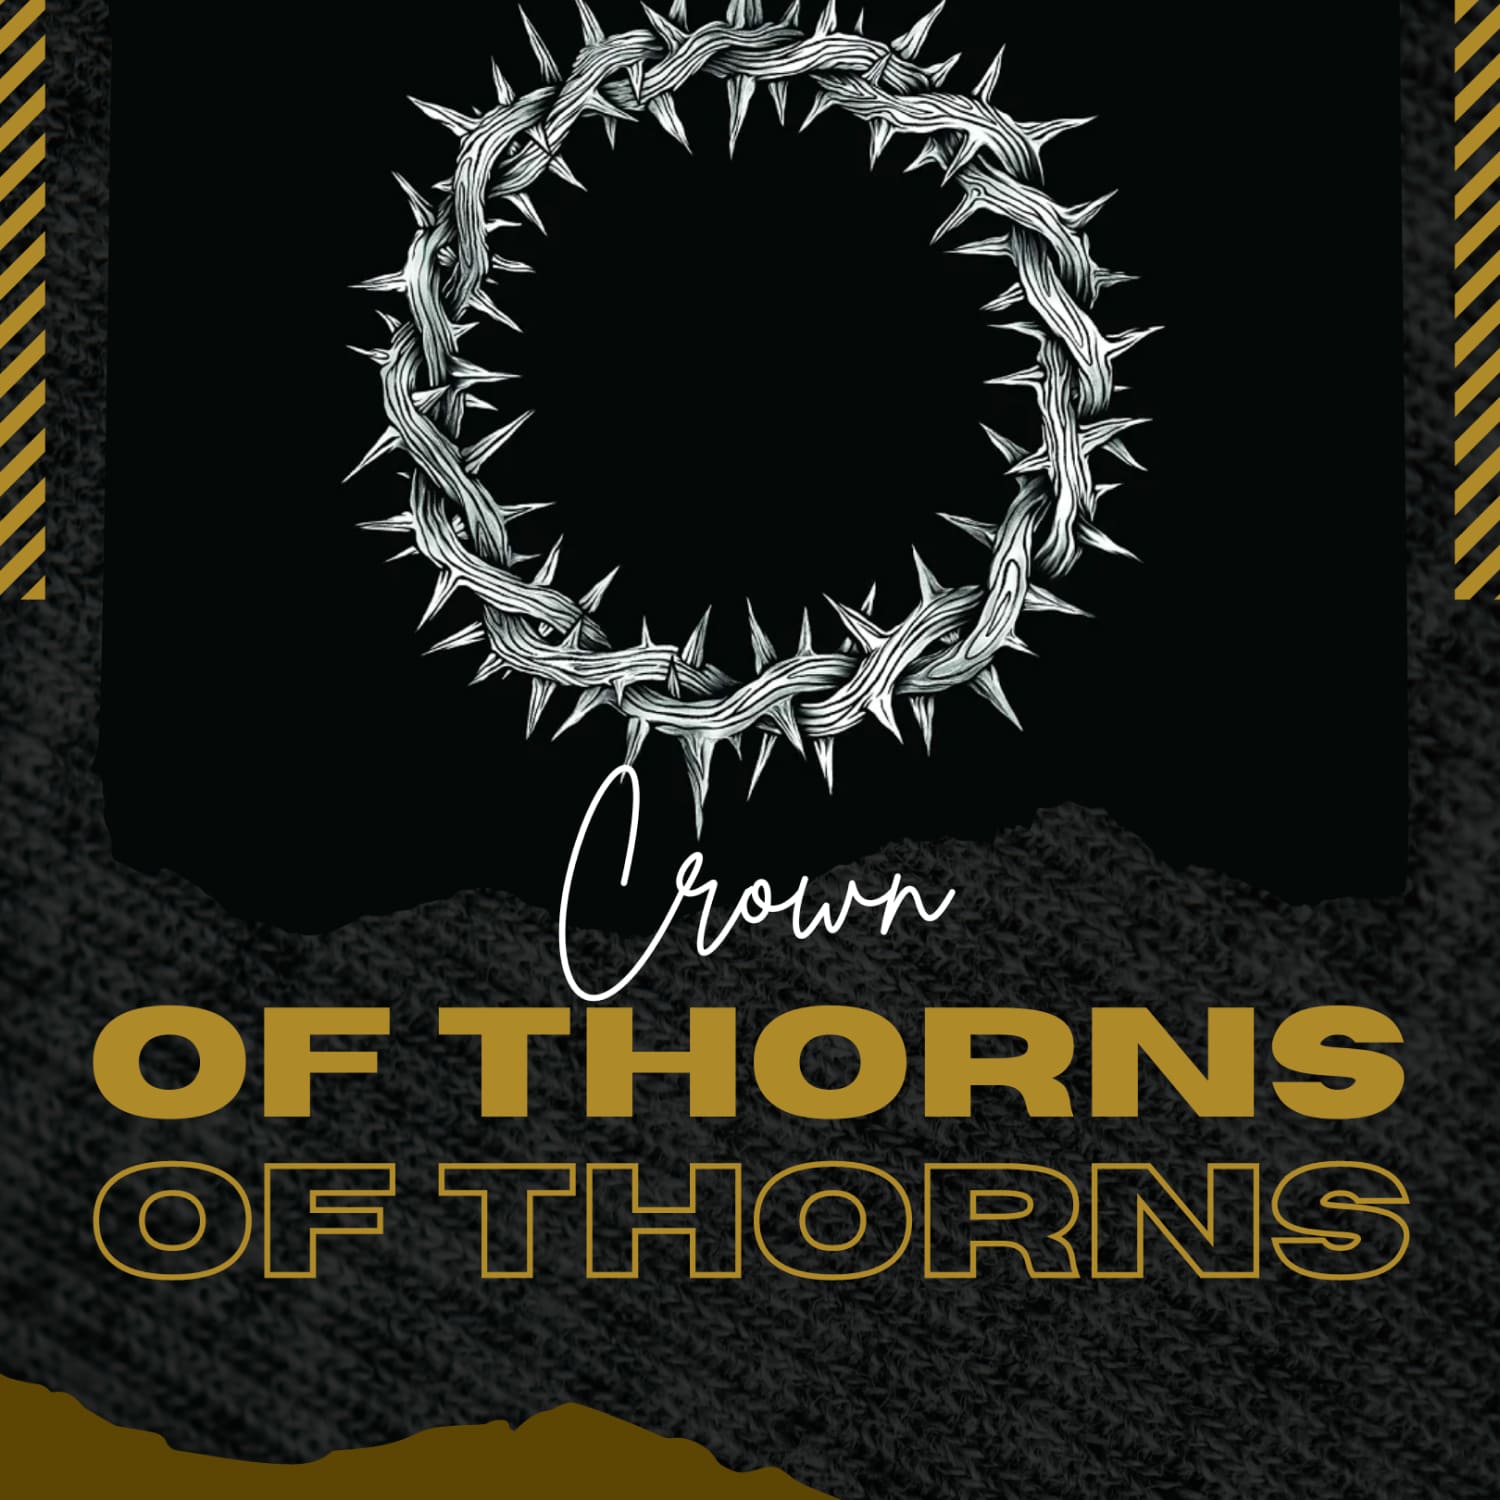 White thorn wreath on a black design background.